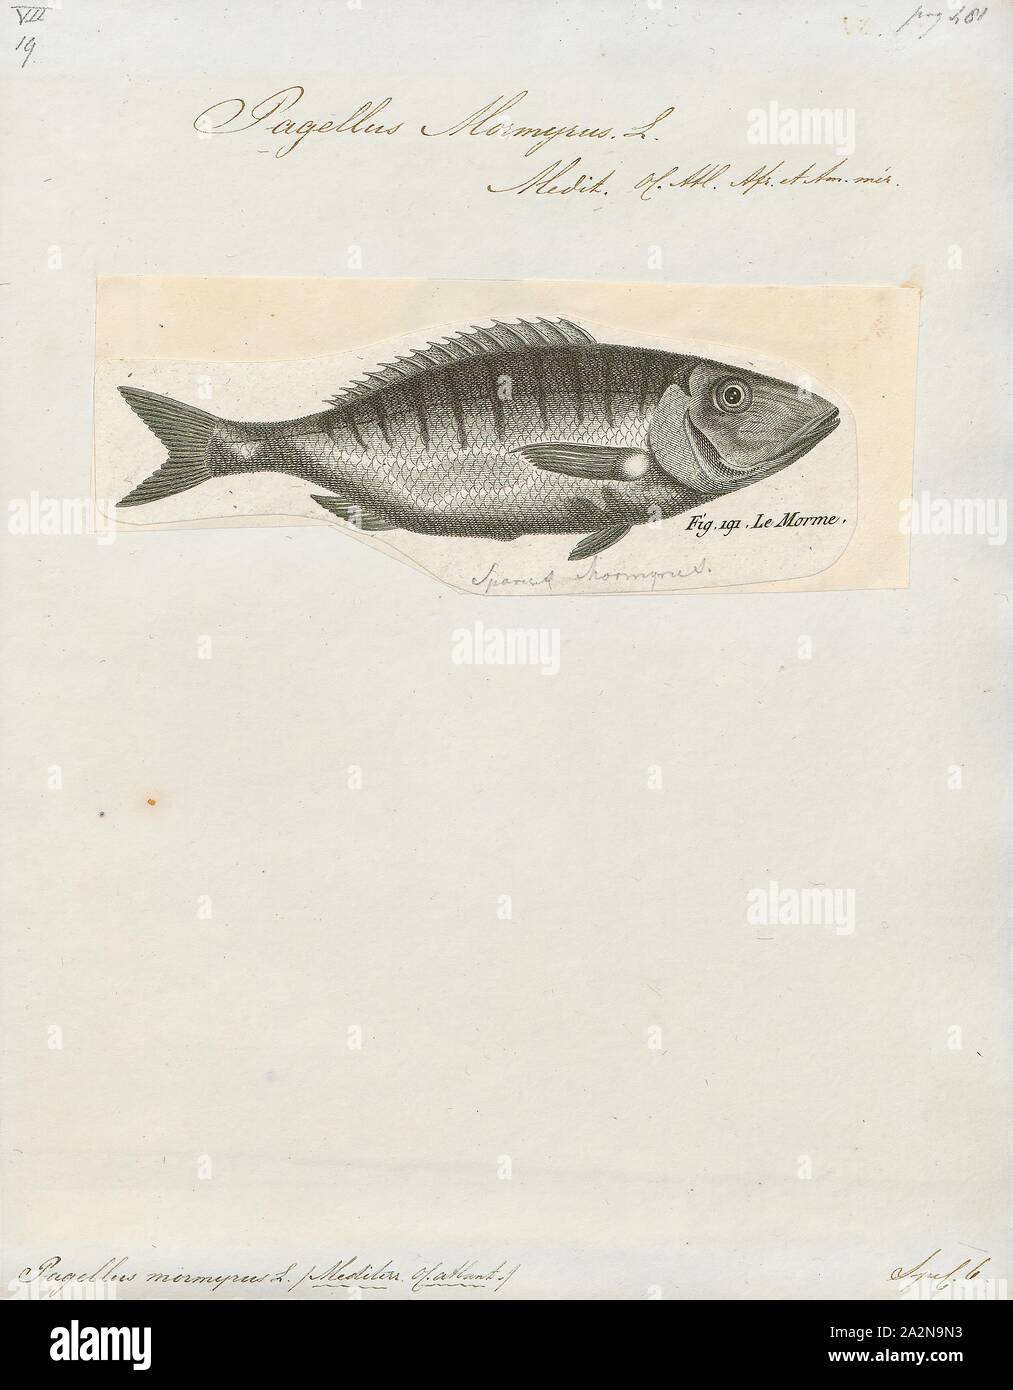 Pagellus mormyrus, Print, 1700-1880 Stock Photo